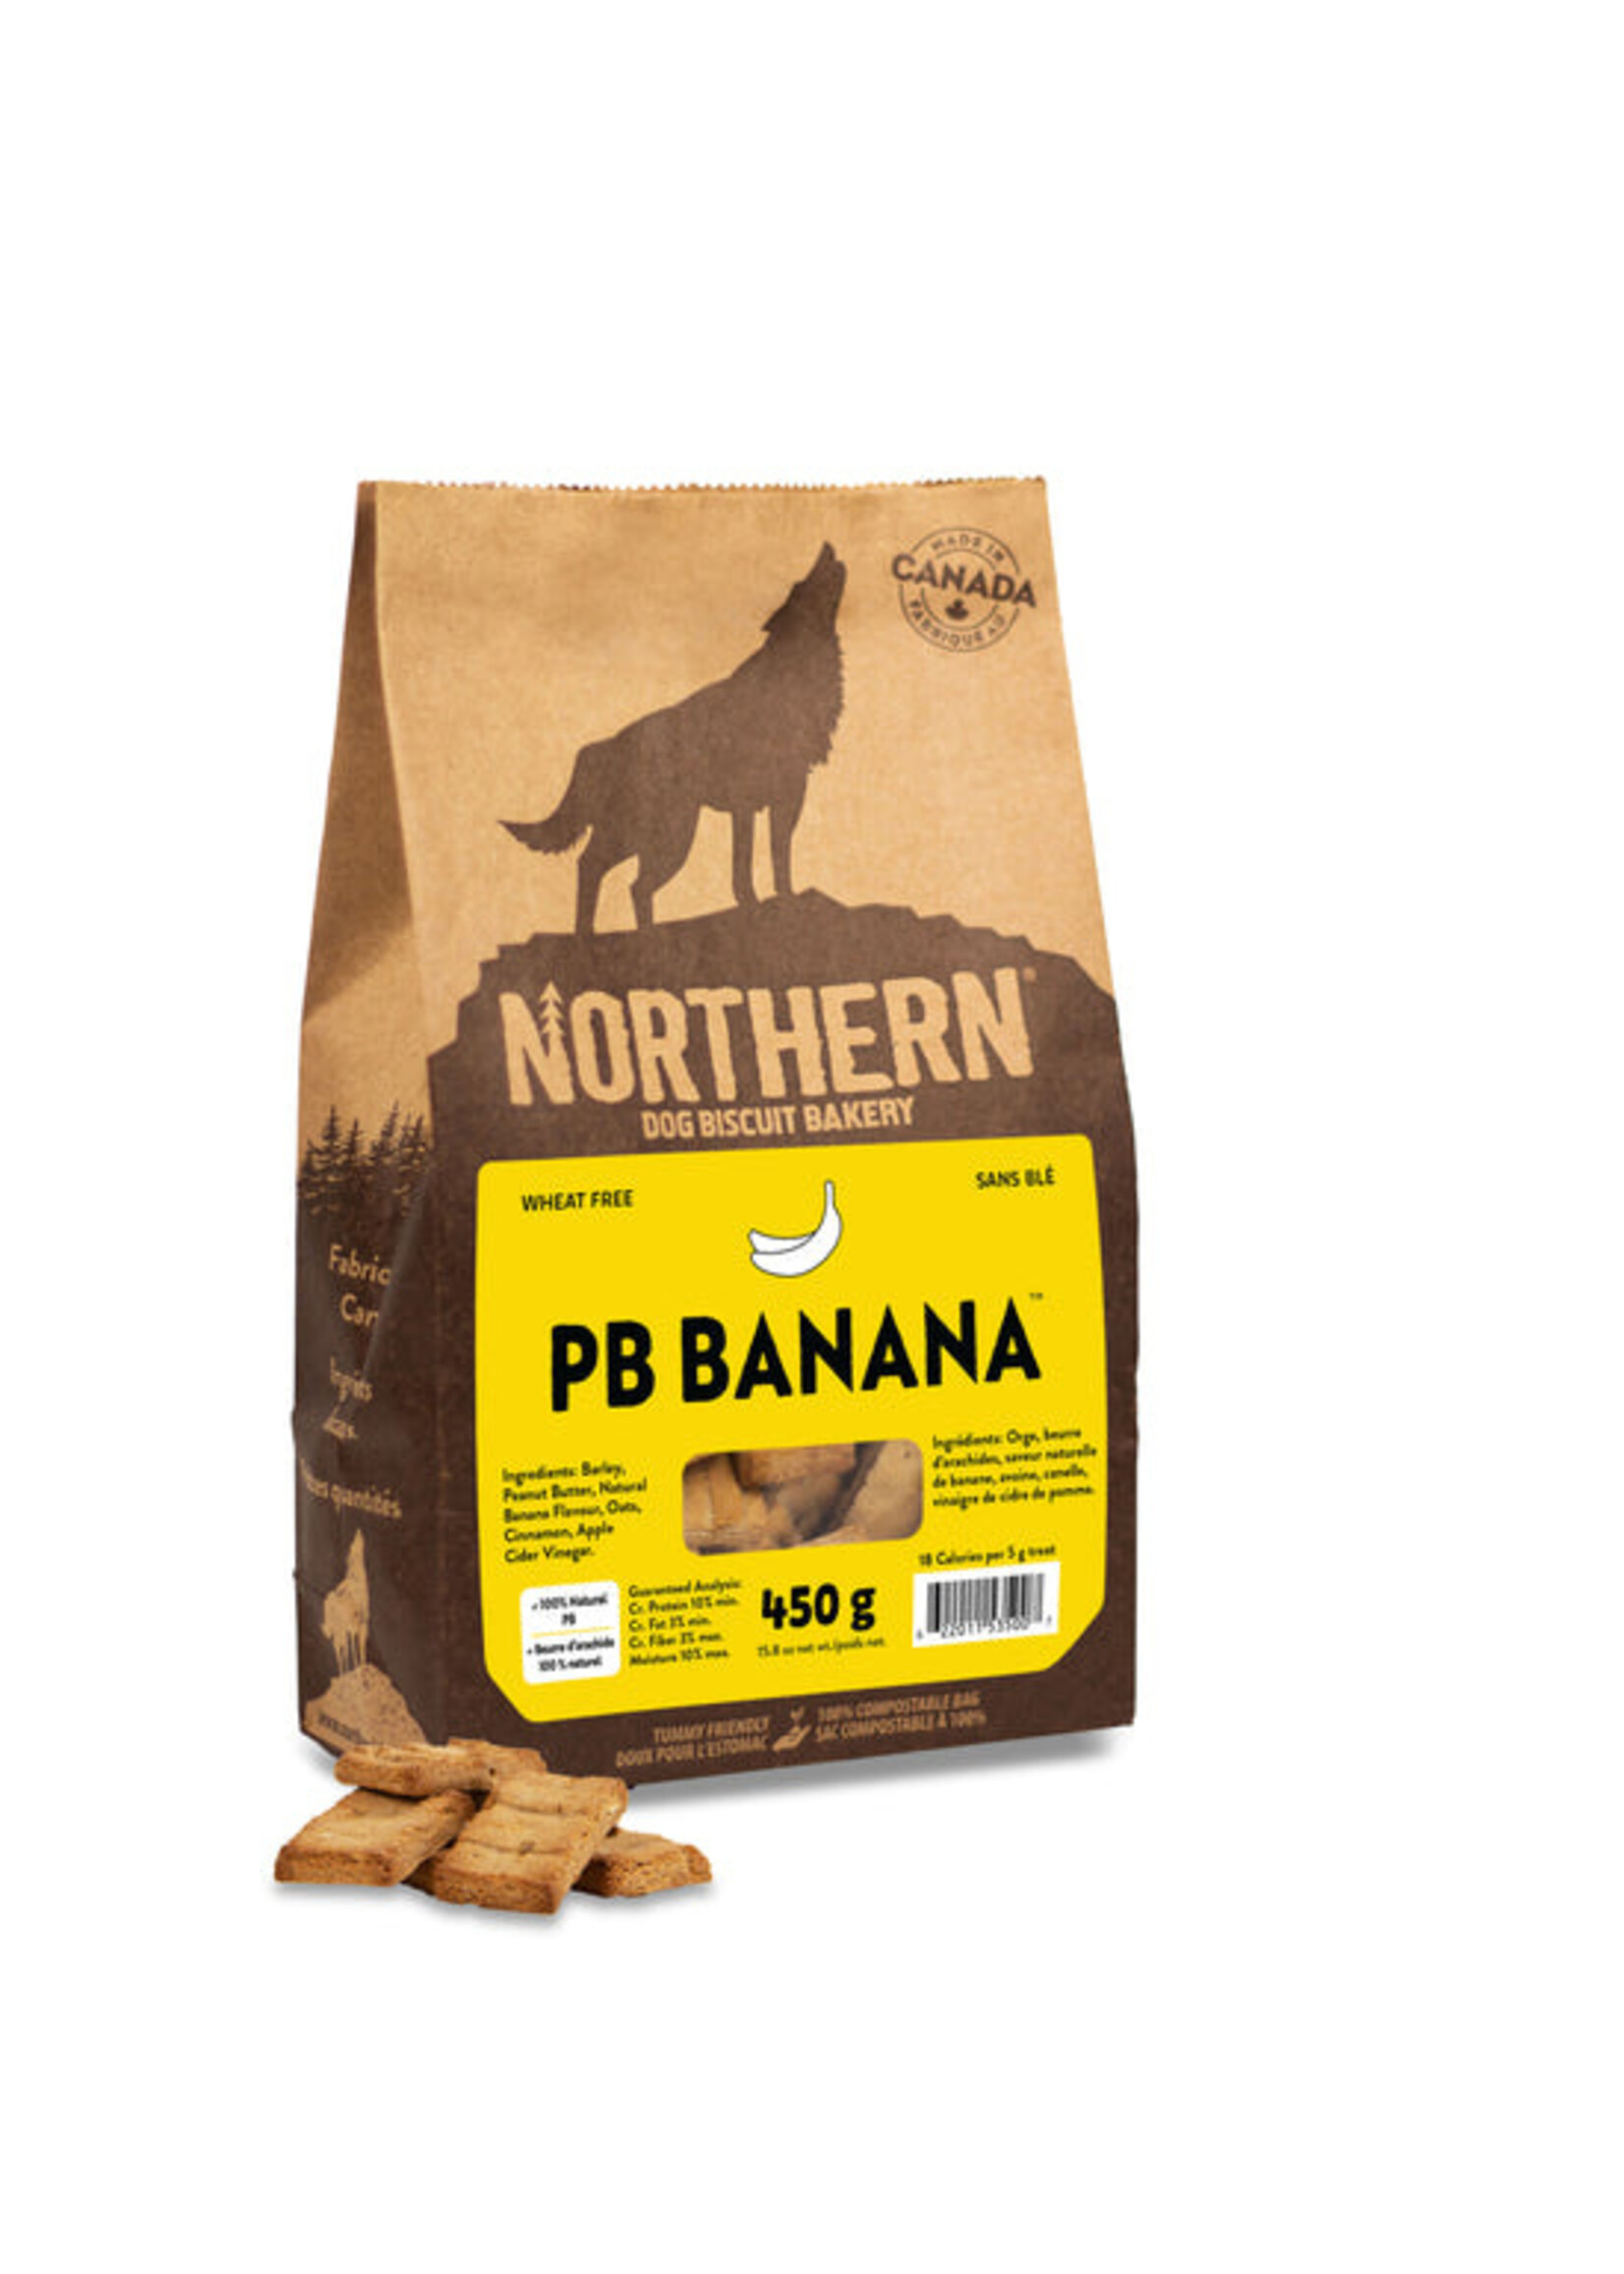 Northern Biscuit WF PB Banana 450 g / 15.9 oz